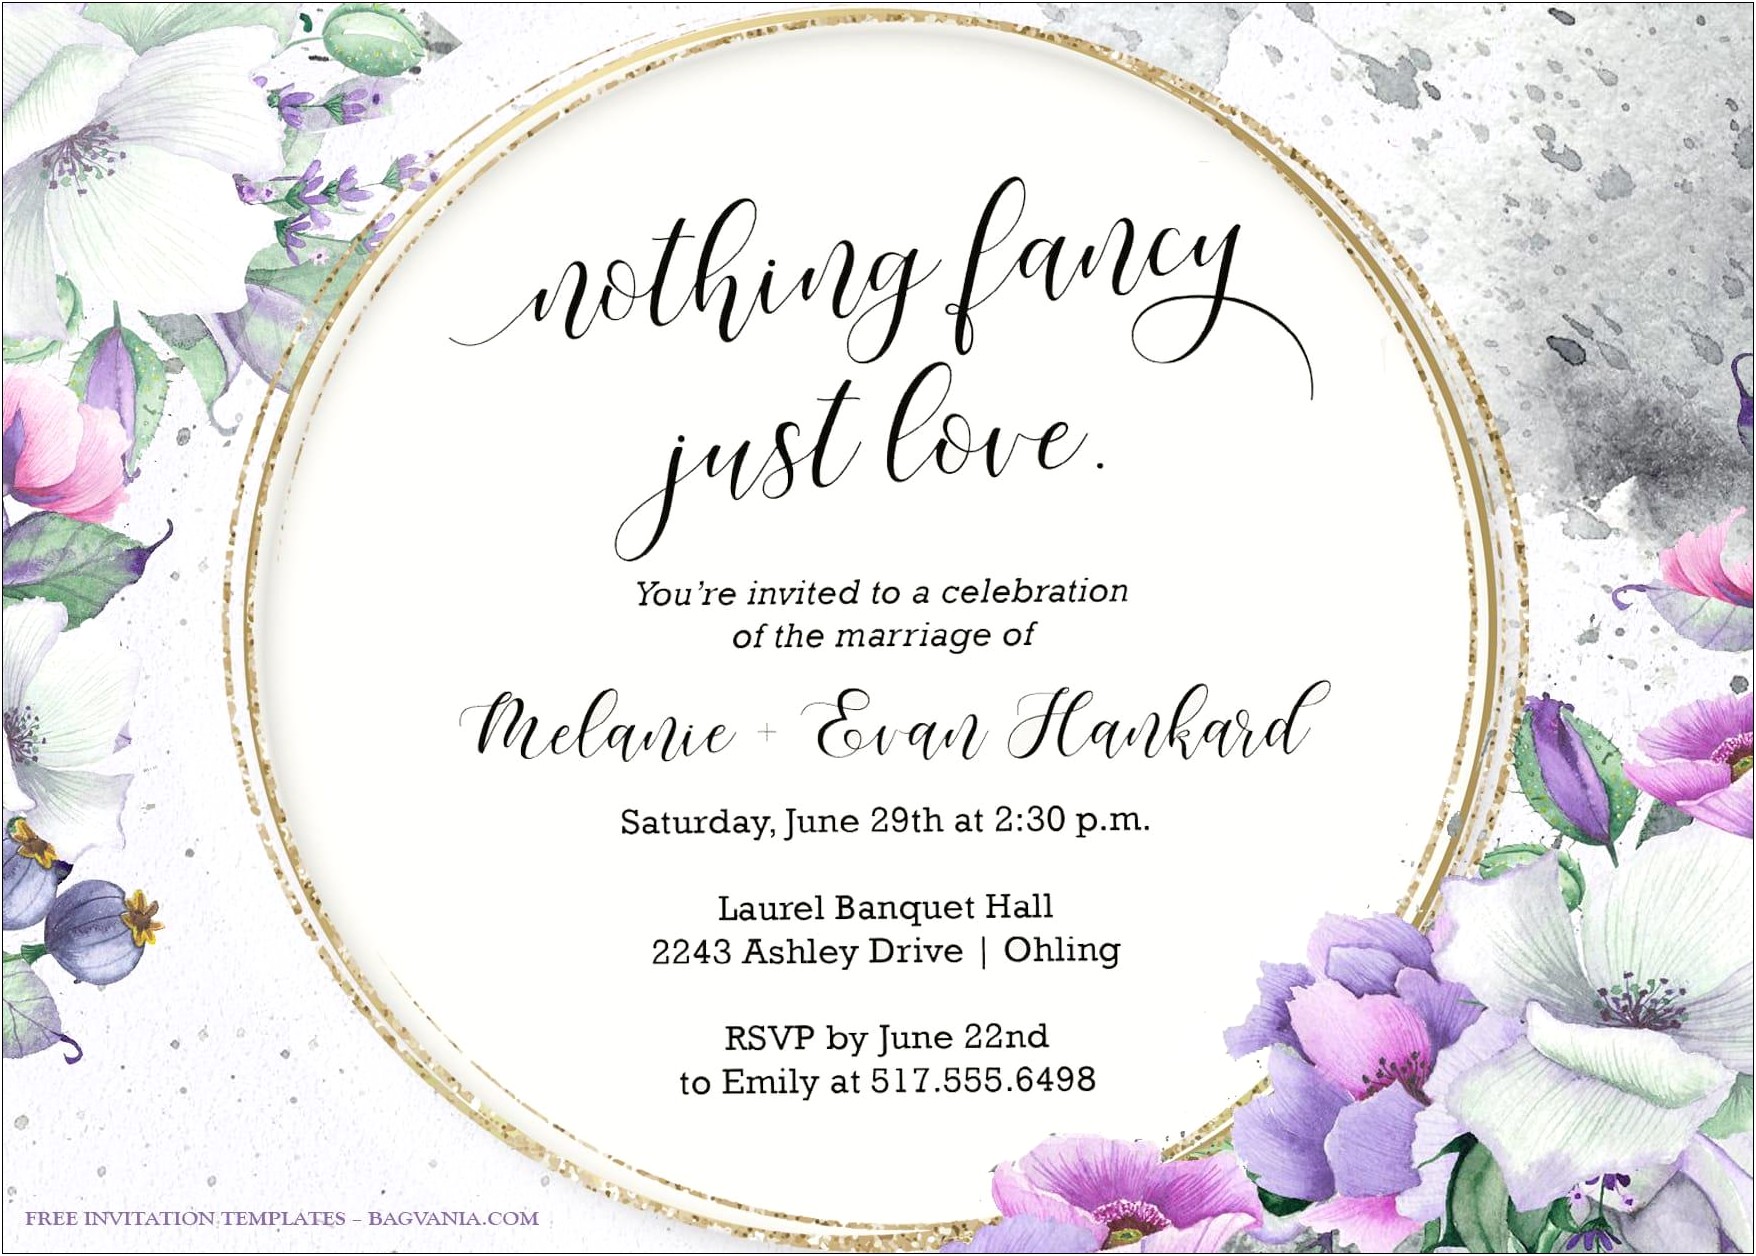 Free Wedding Invitation Images For Whatsapp